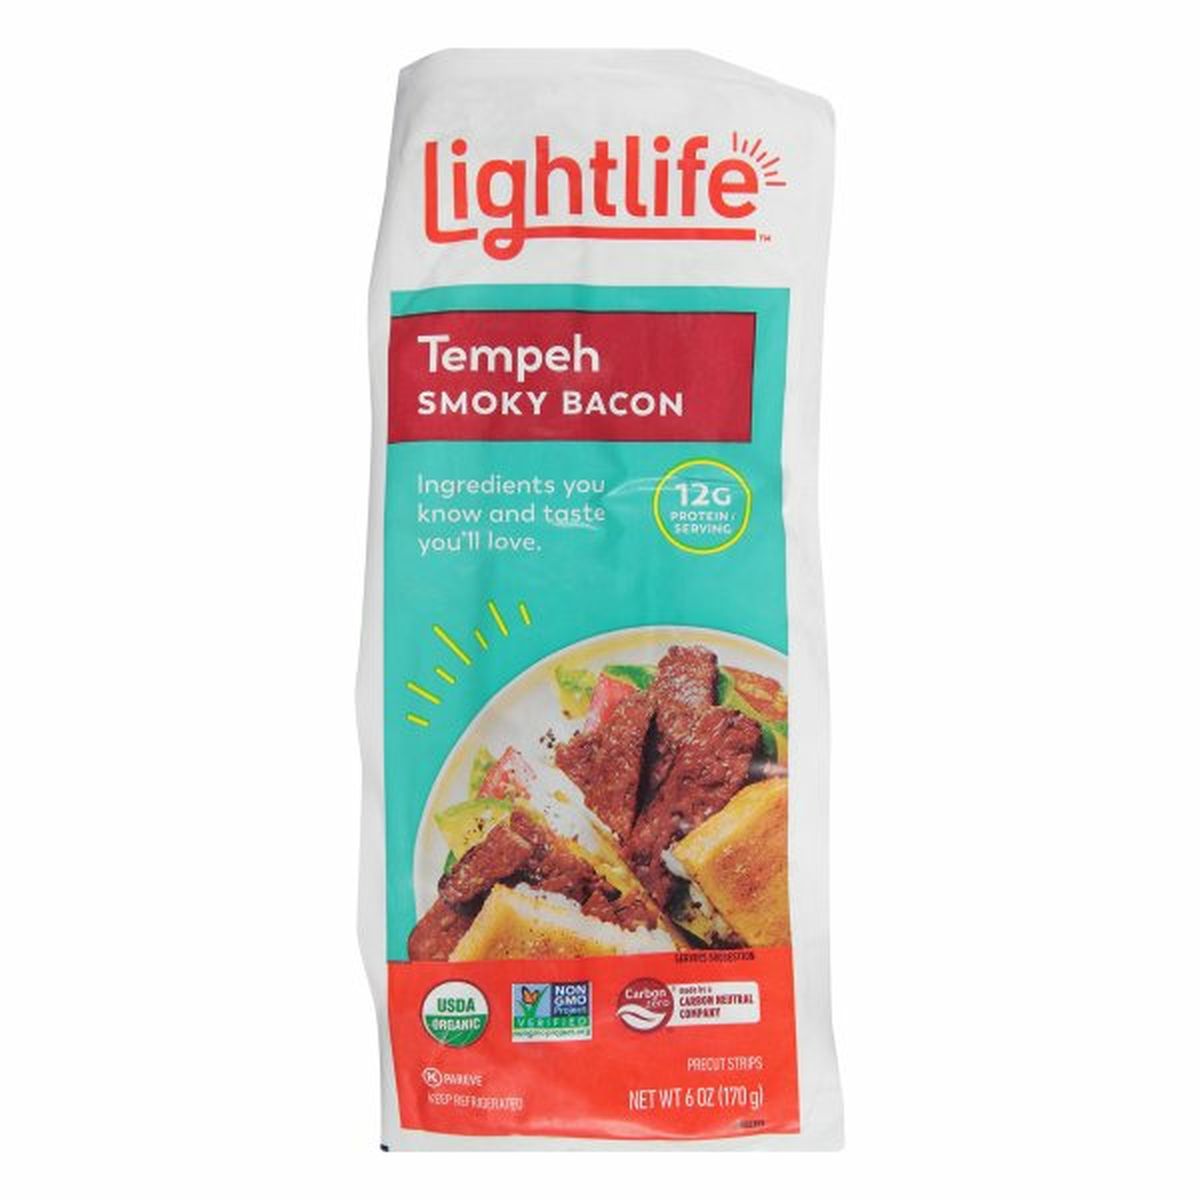 Calories in Lightlife Tempeh, Smoky Bacon